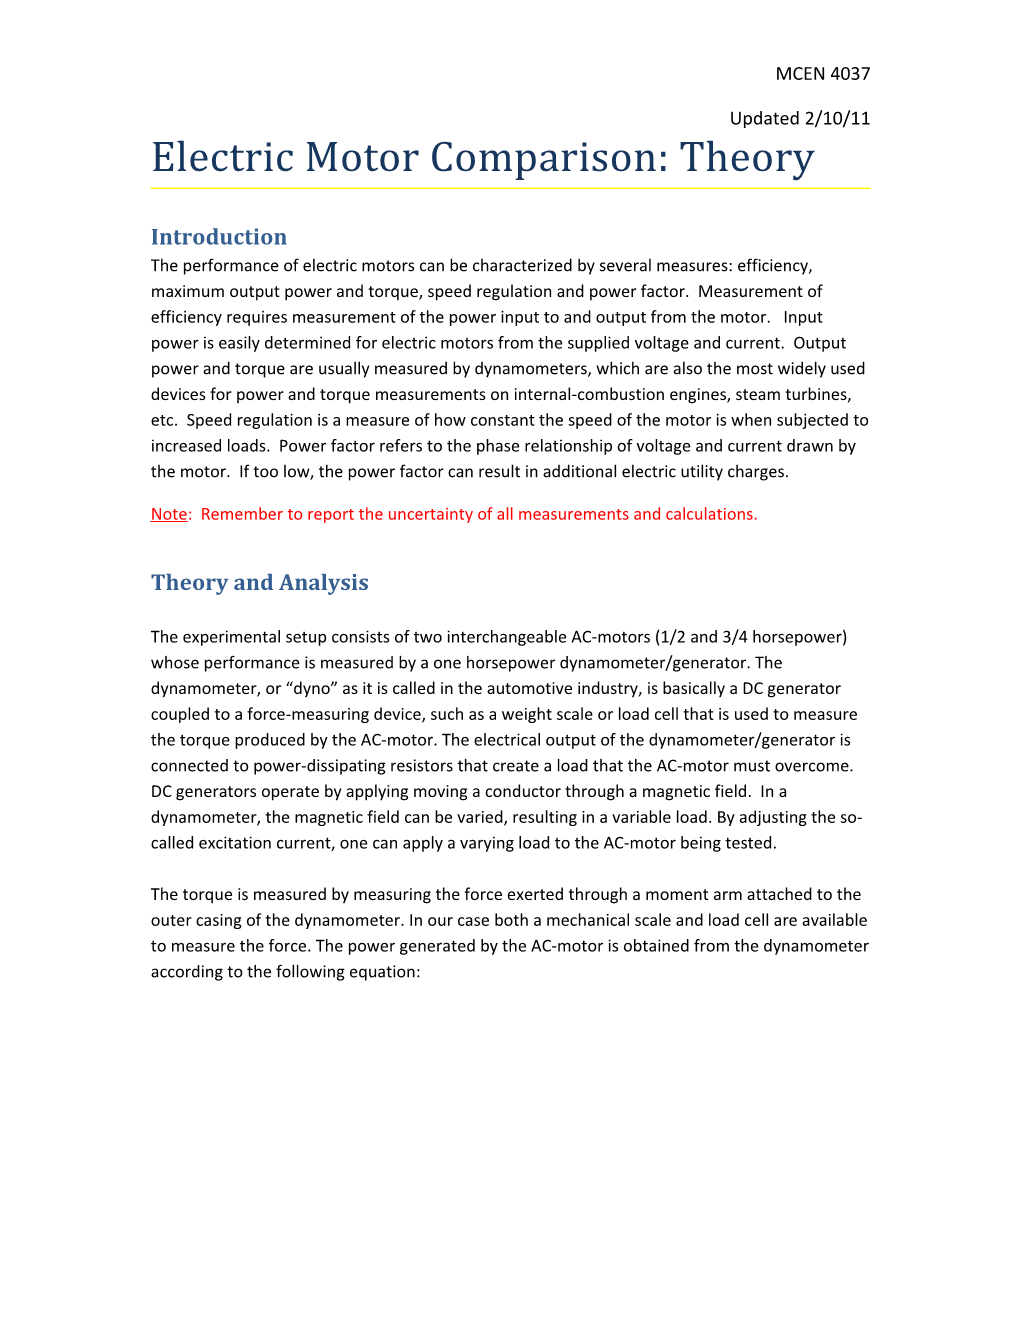 Electric Motor Comparison